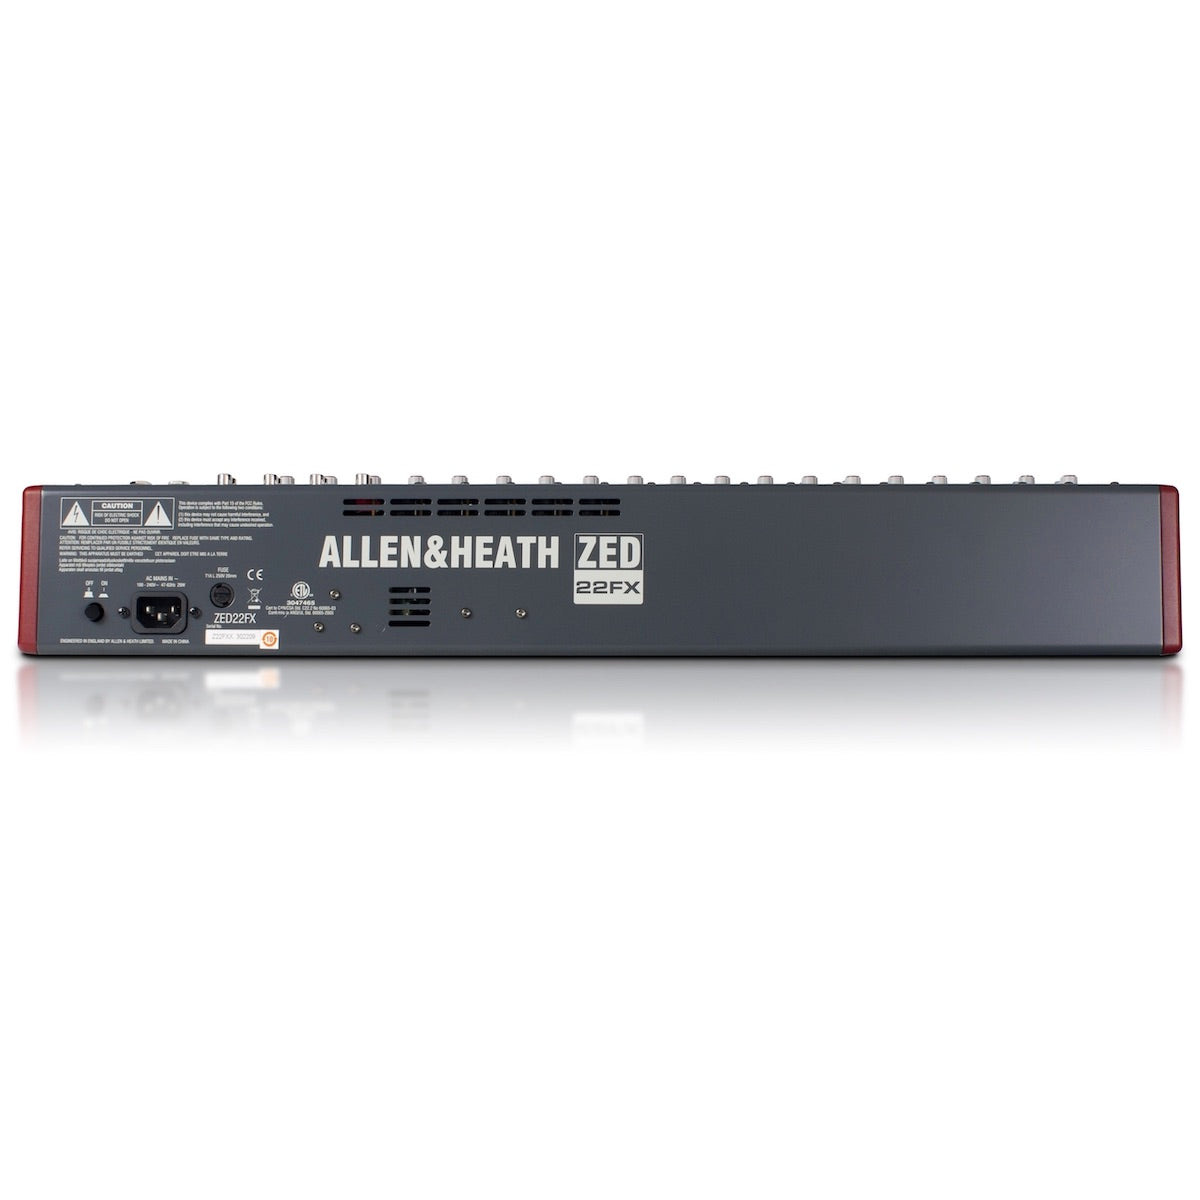 Allen & Heath ZED-22FX 22-Channel Analog USB Mixer with Effects, rear